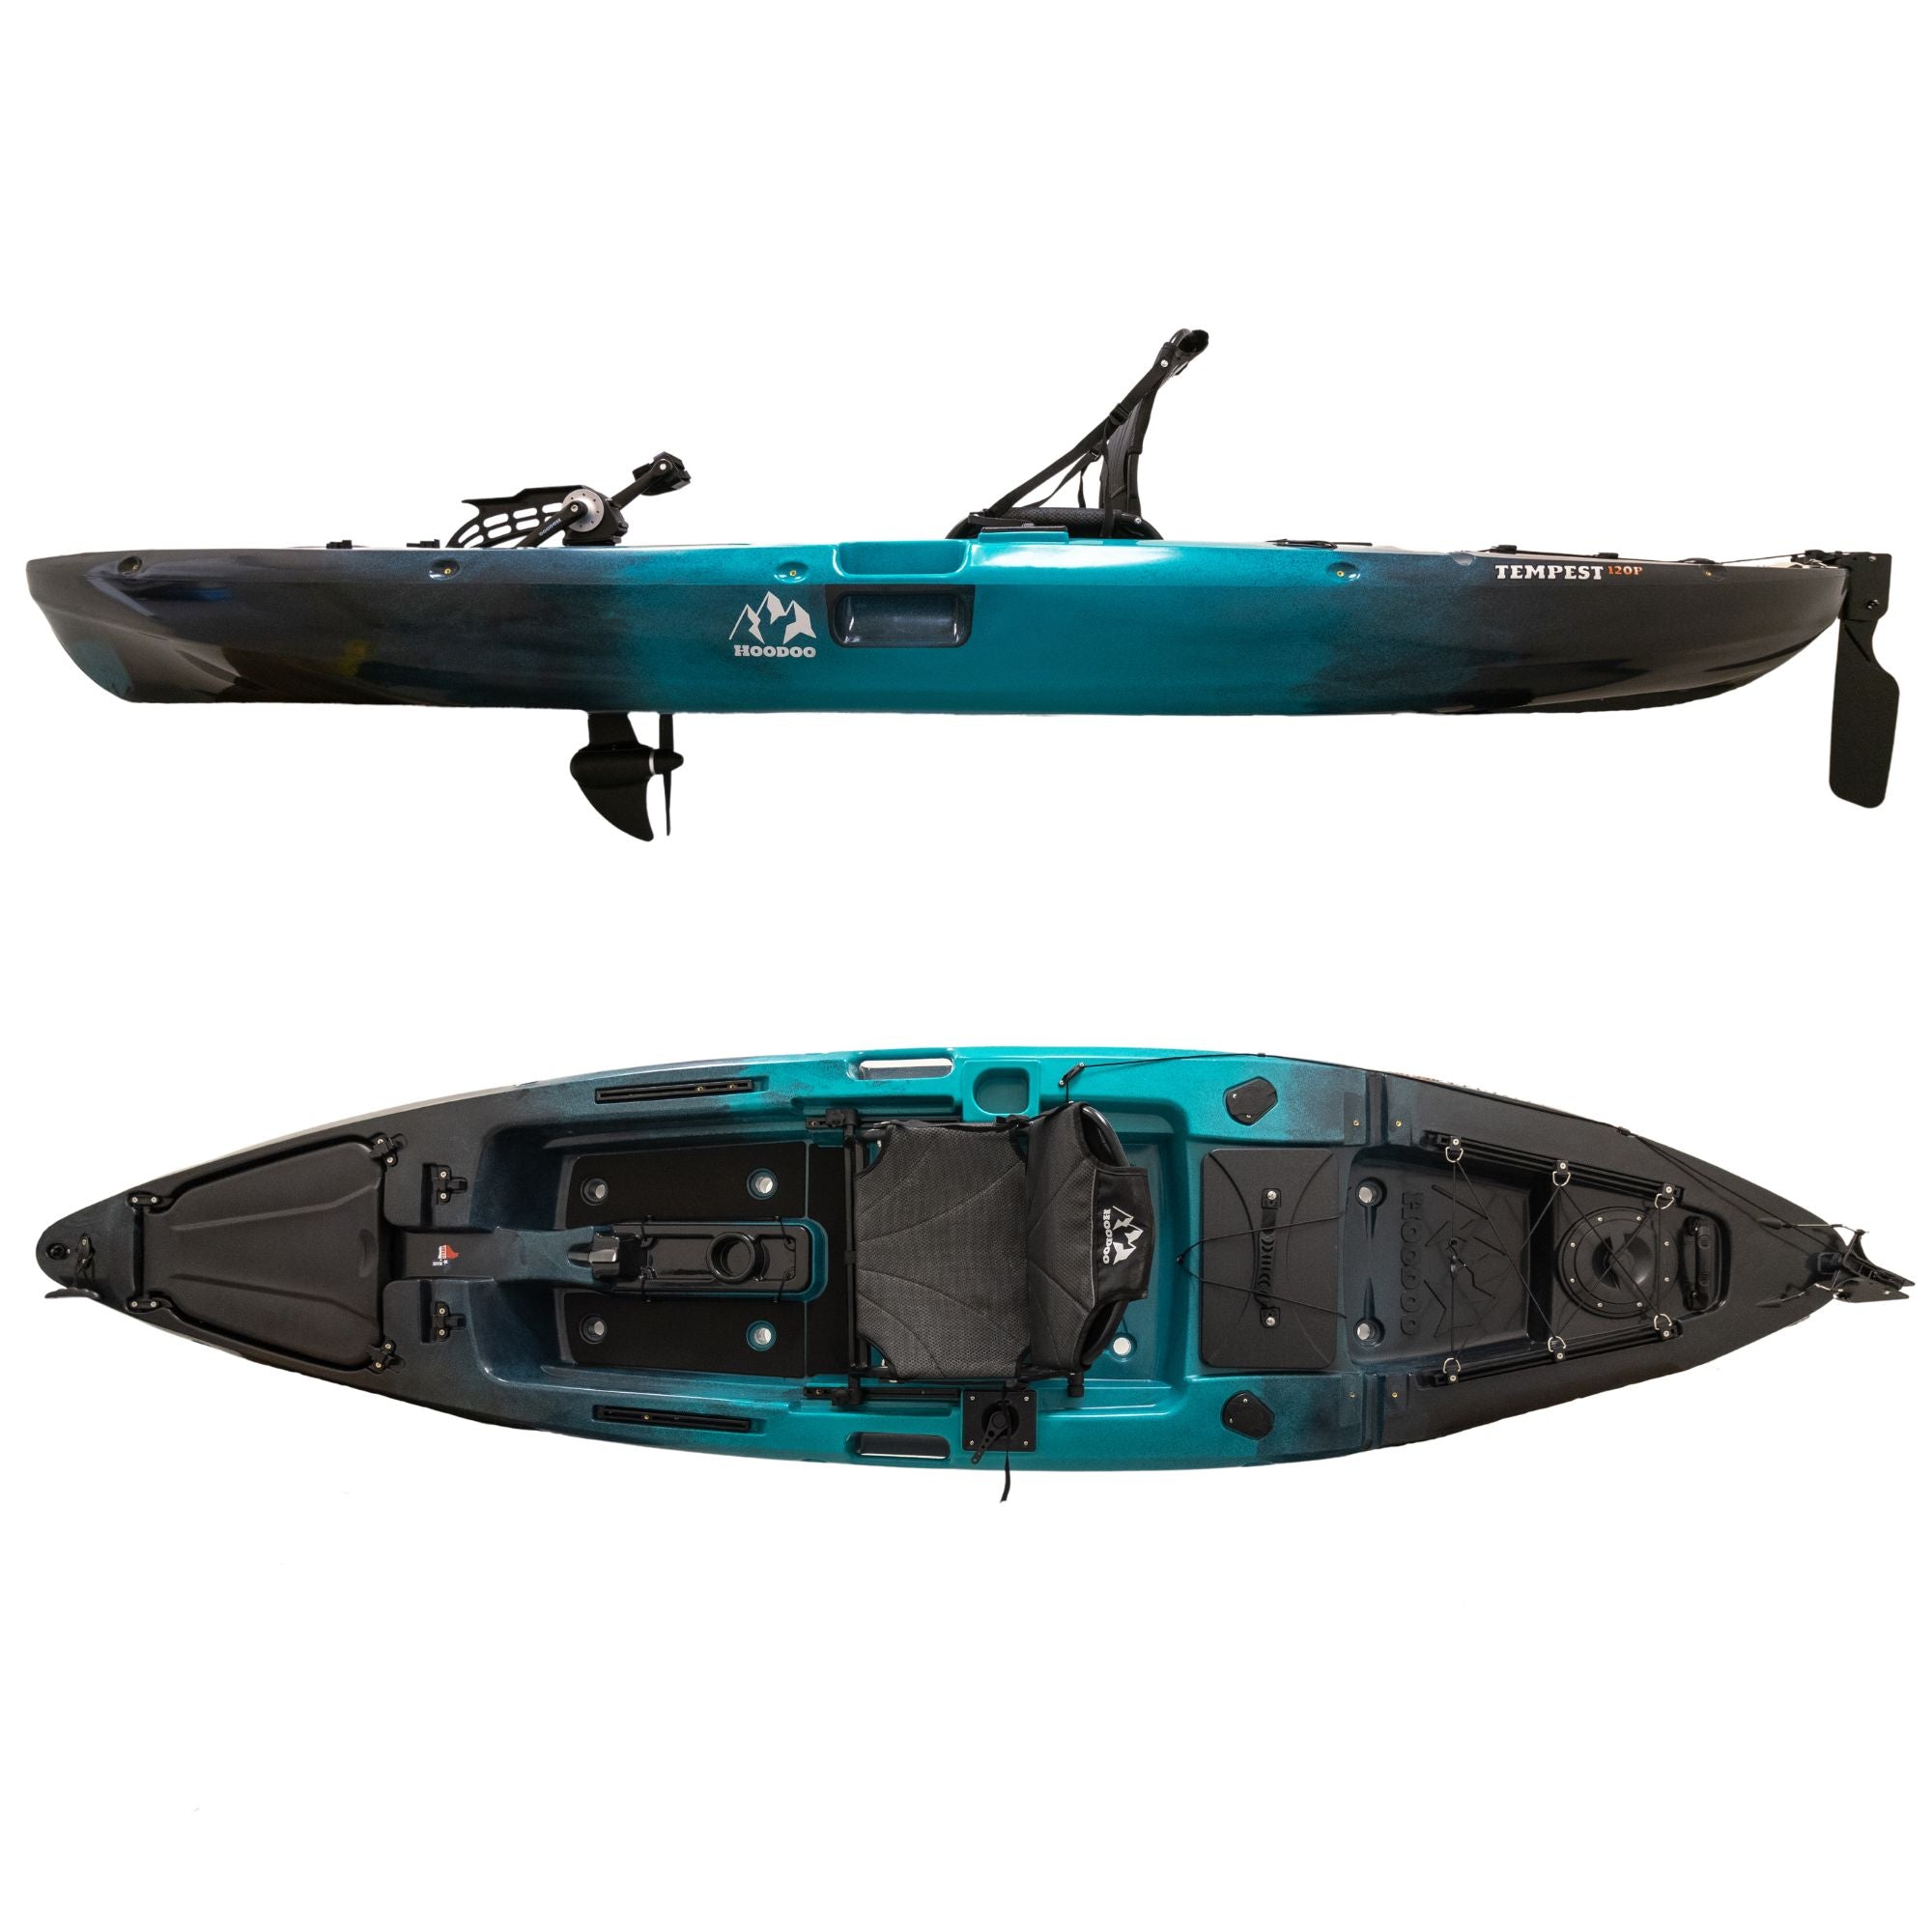 Top 5 Must Have Fishing Kayak Accessories, Blog, Nautical Ventures